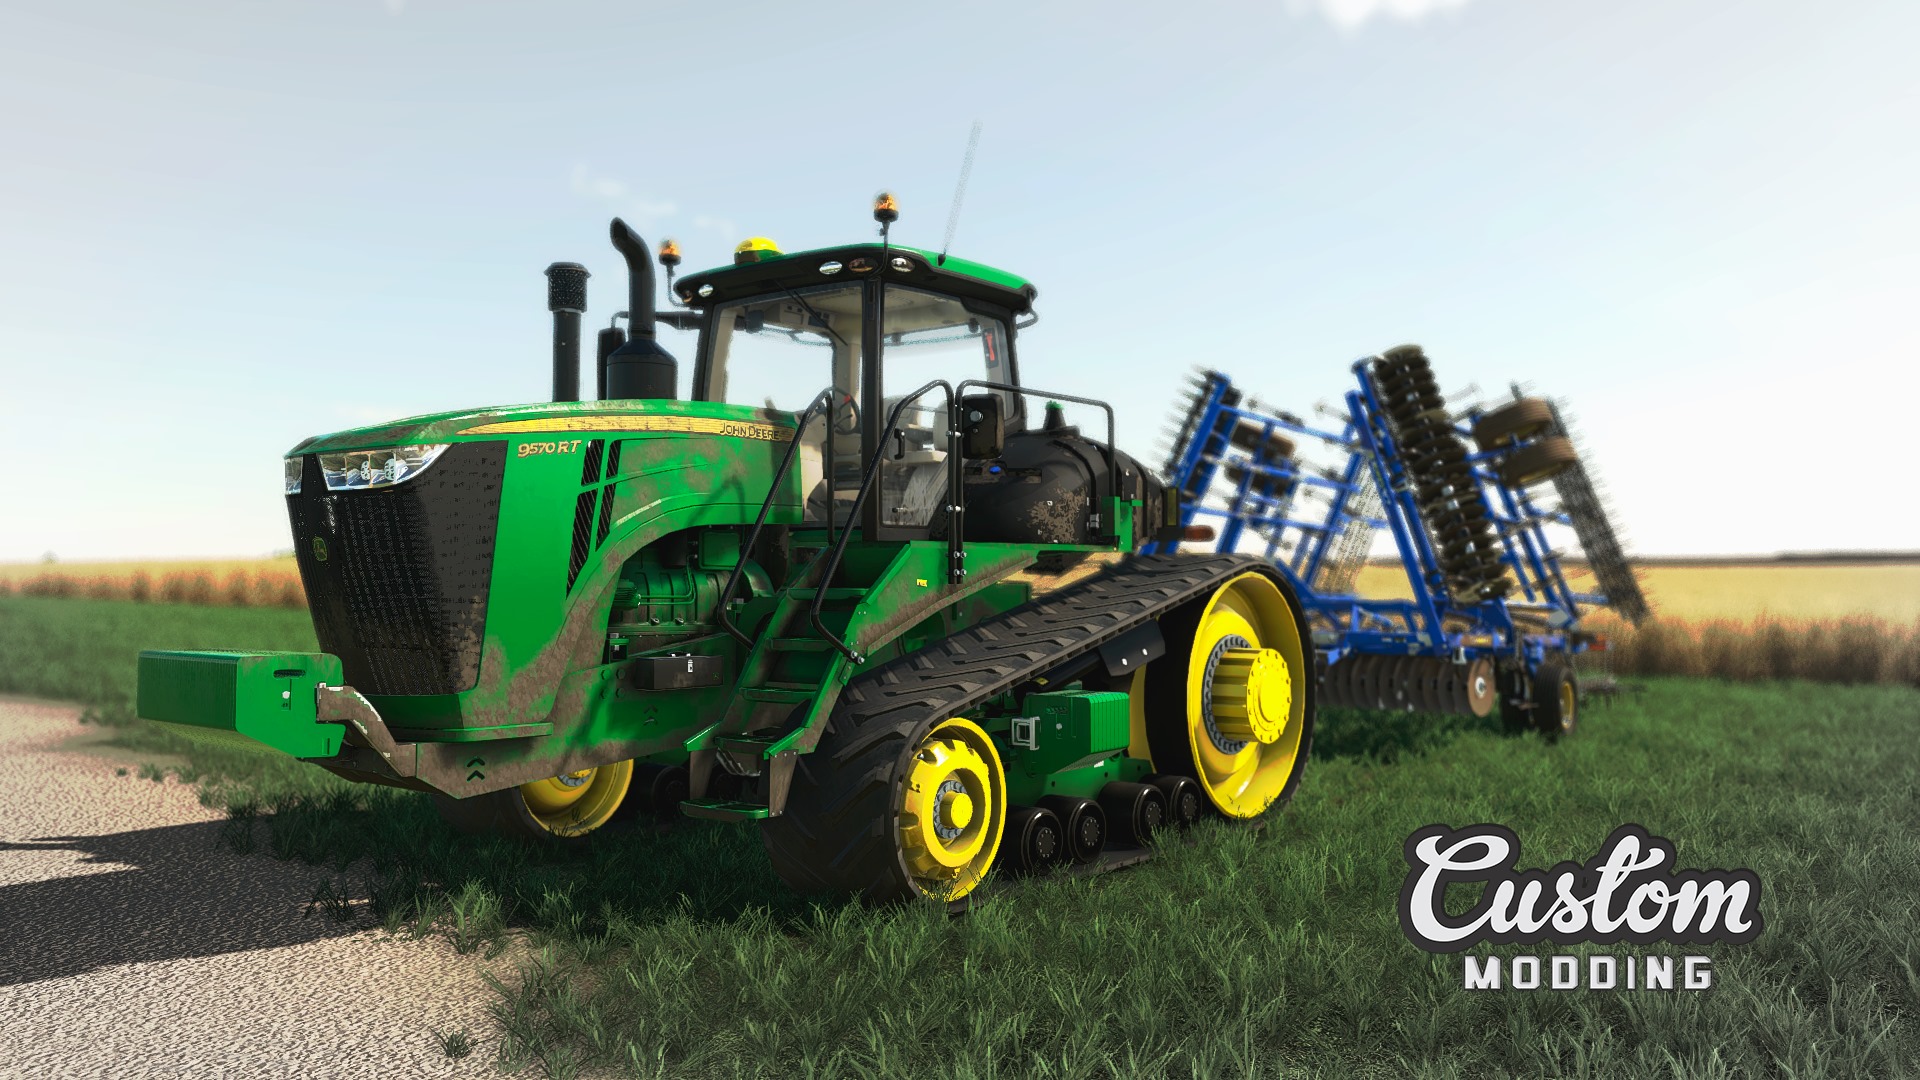 МОД John Deere 9rt Series V1000 ДЛЯ Farming Simulator 2019 Fs 19 Тракторы Farming 5690